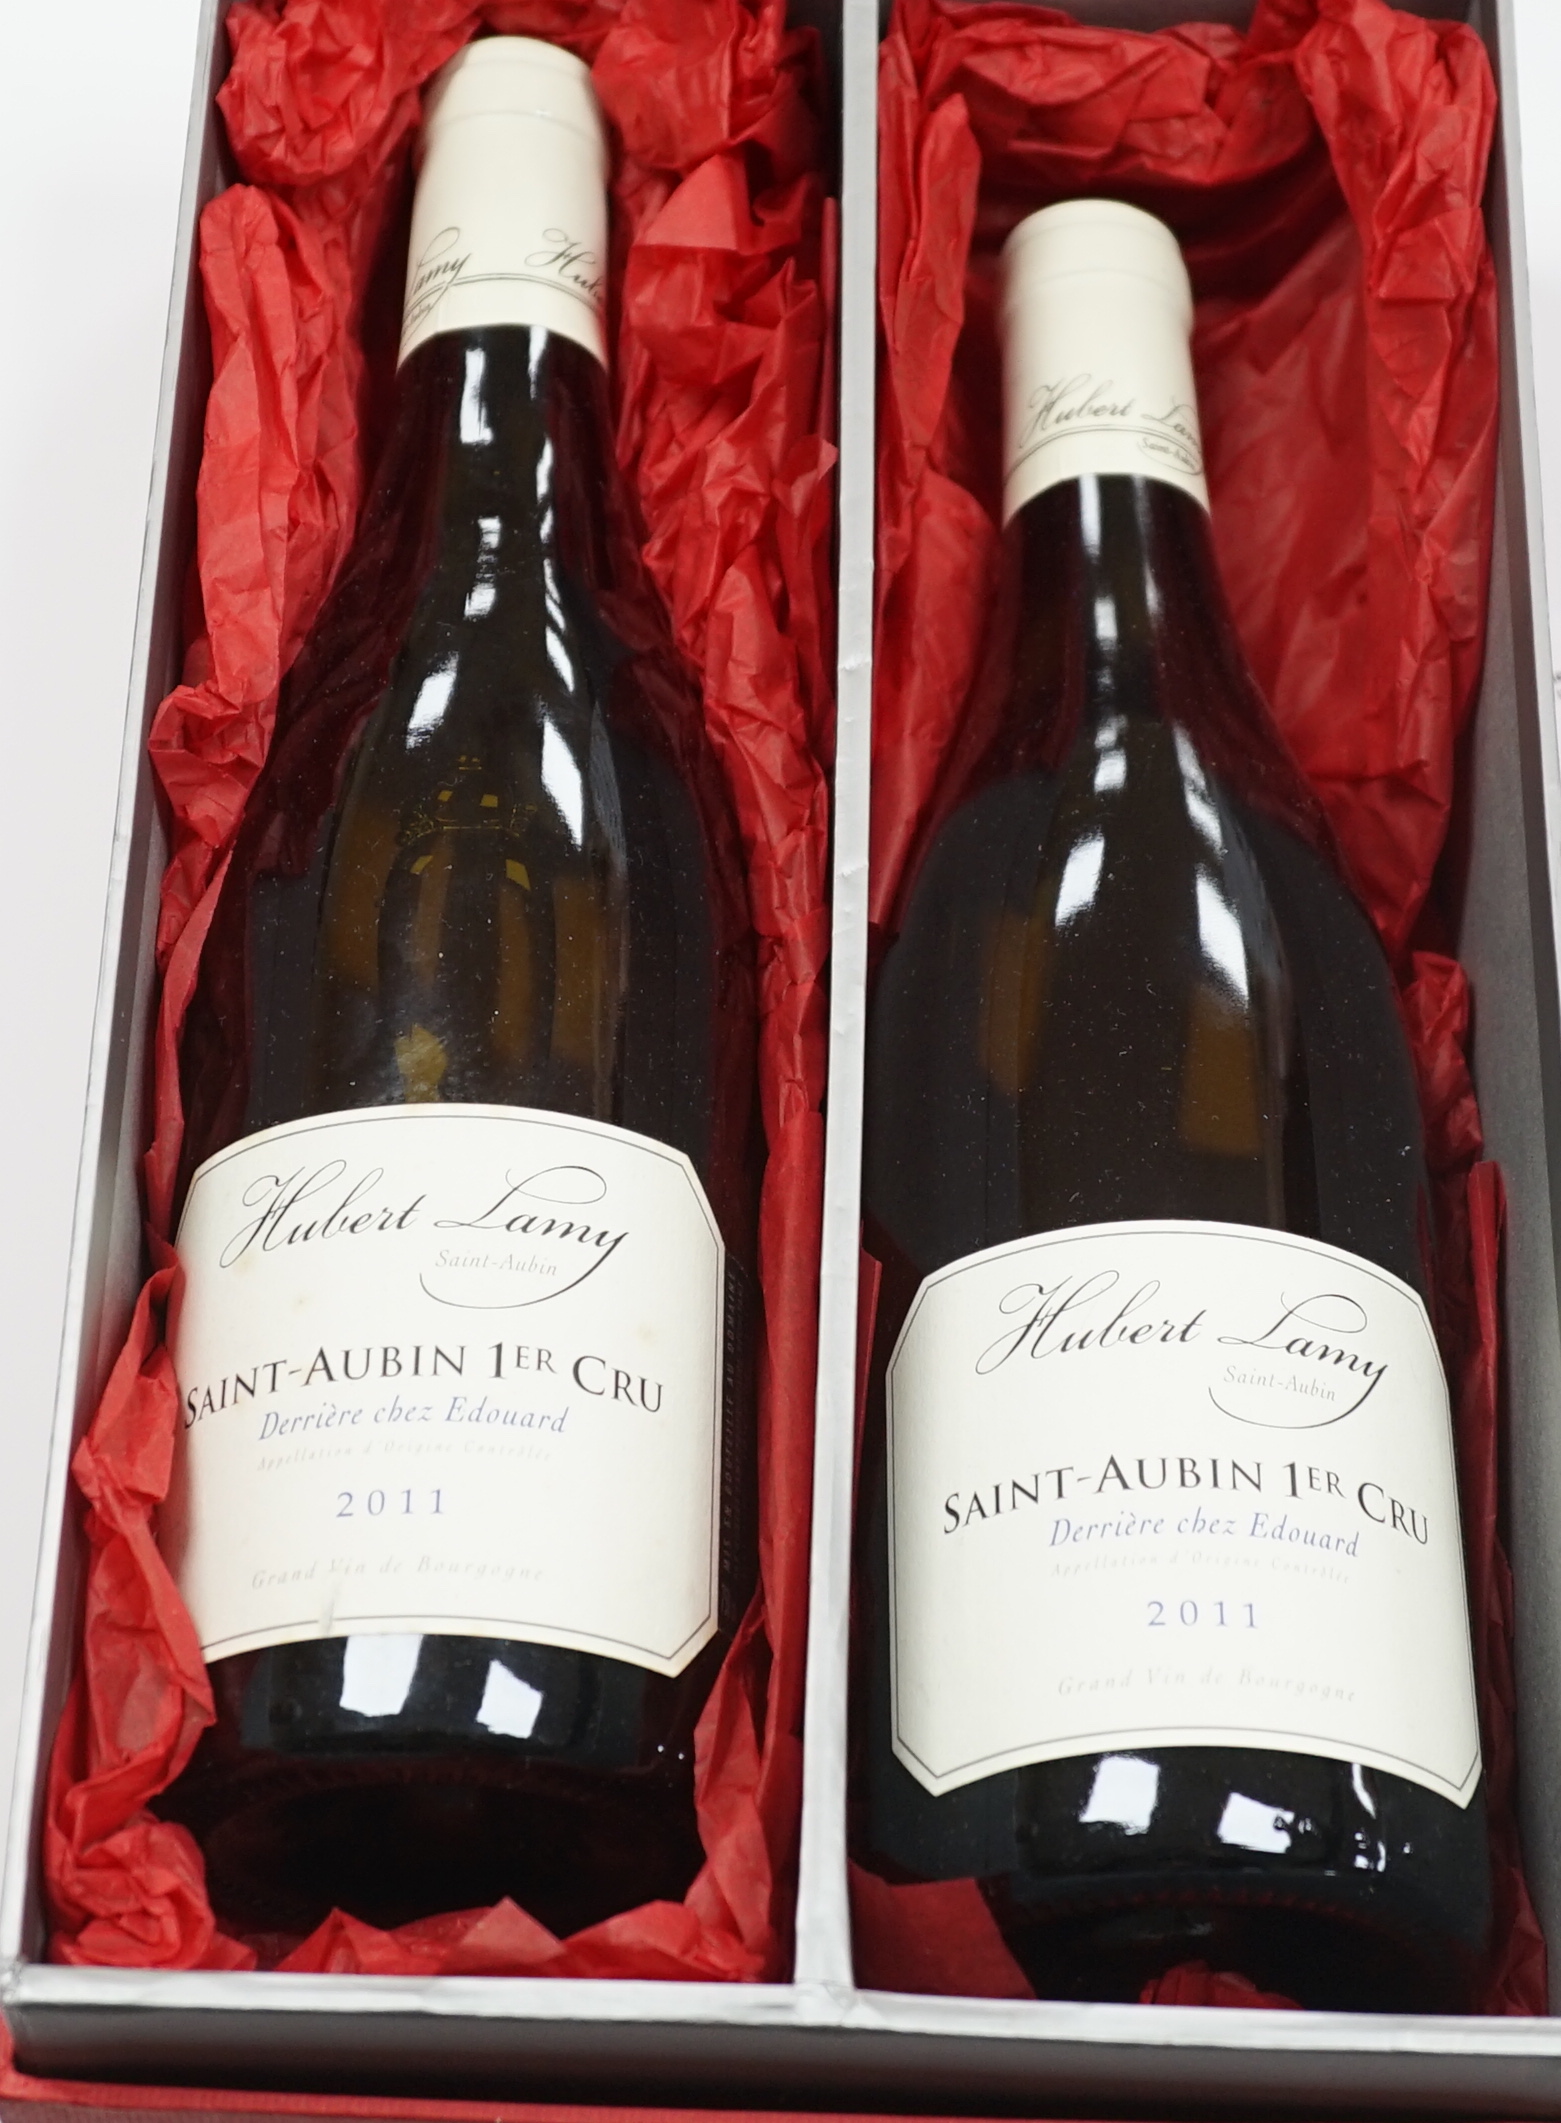 Two bottles of Hubert Lamy Saint-Aubin 1er Cru Derriere chez Edouard 2011 Bourgogne